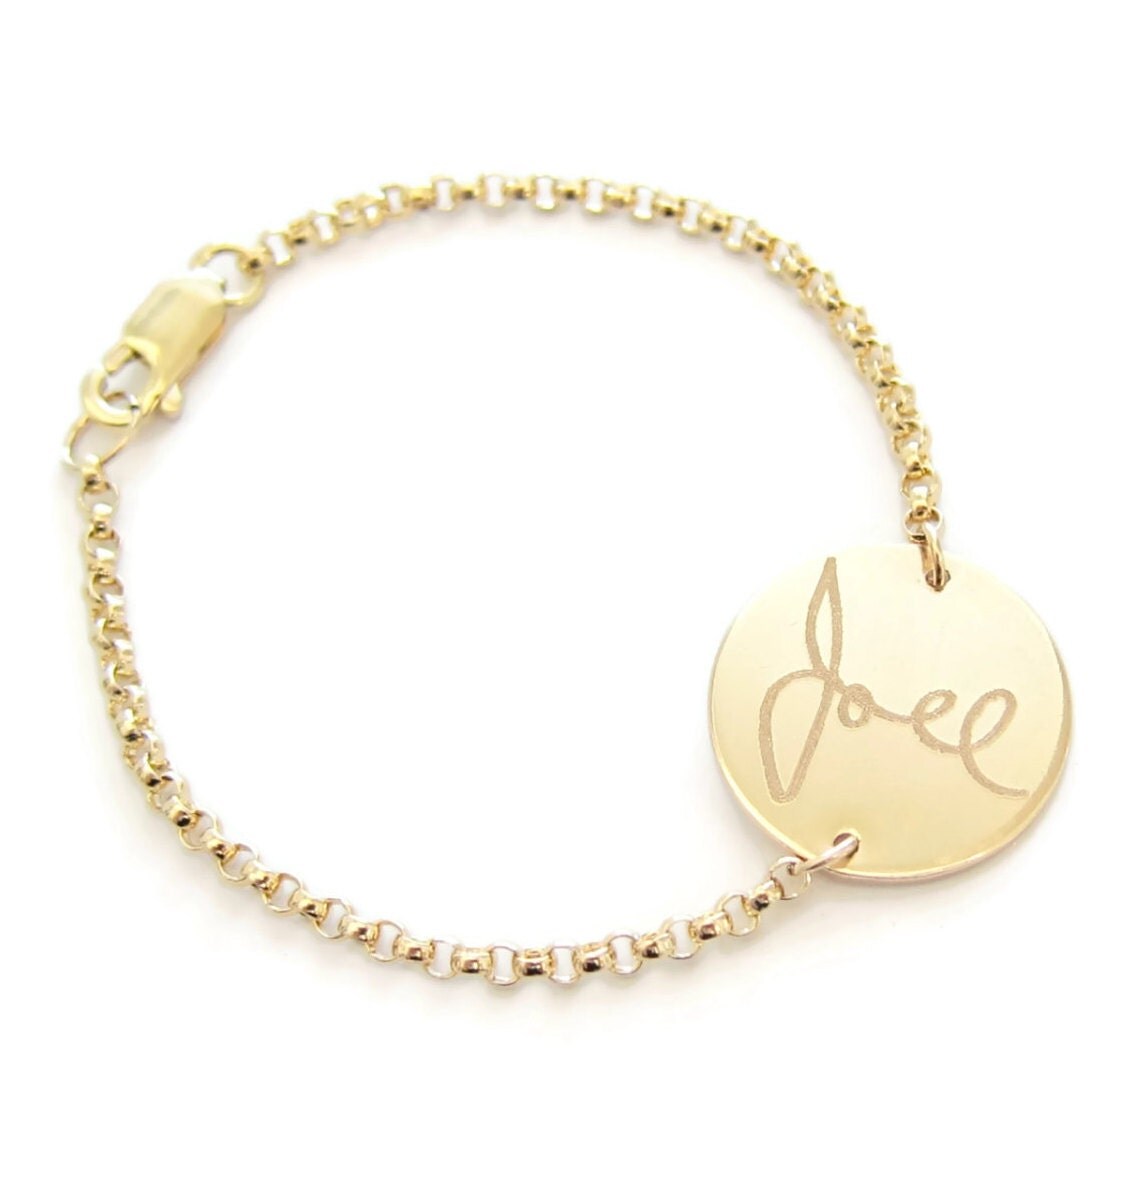 Gold HANDWRITING Bracelet, Actual Signature Charm & Chain Bracelet, Personalized Handwriting Jewelry, Custom Memory and Keepsake Bracelet